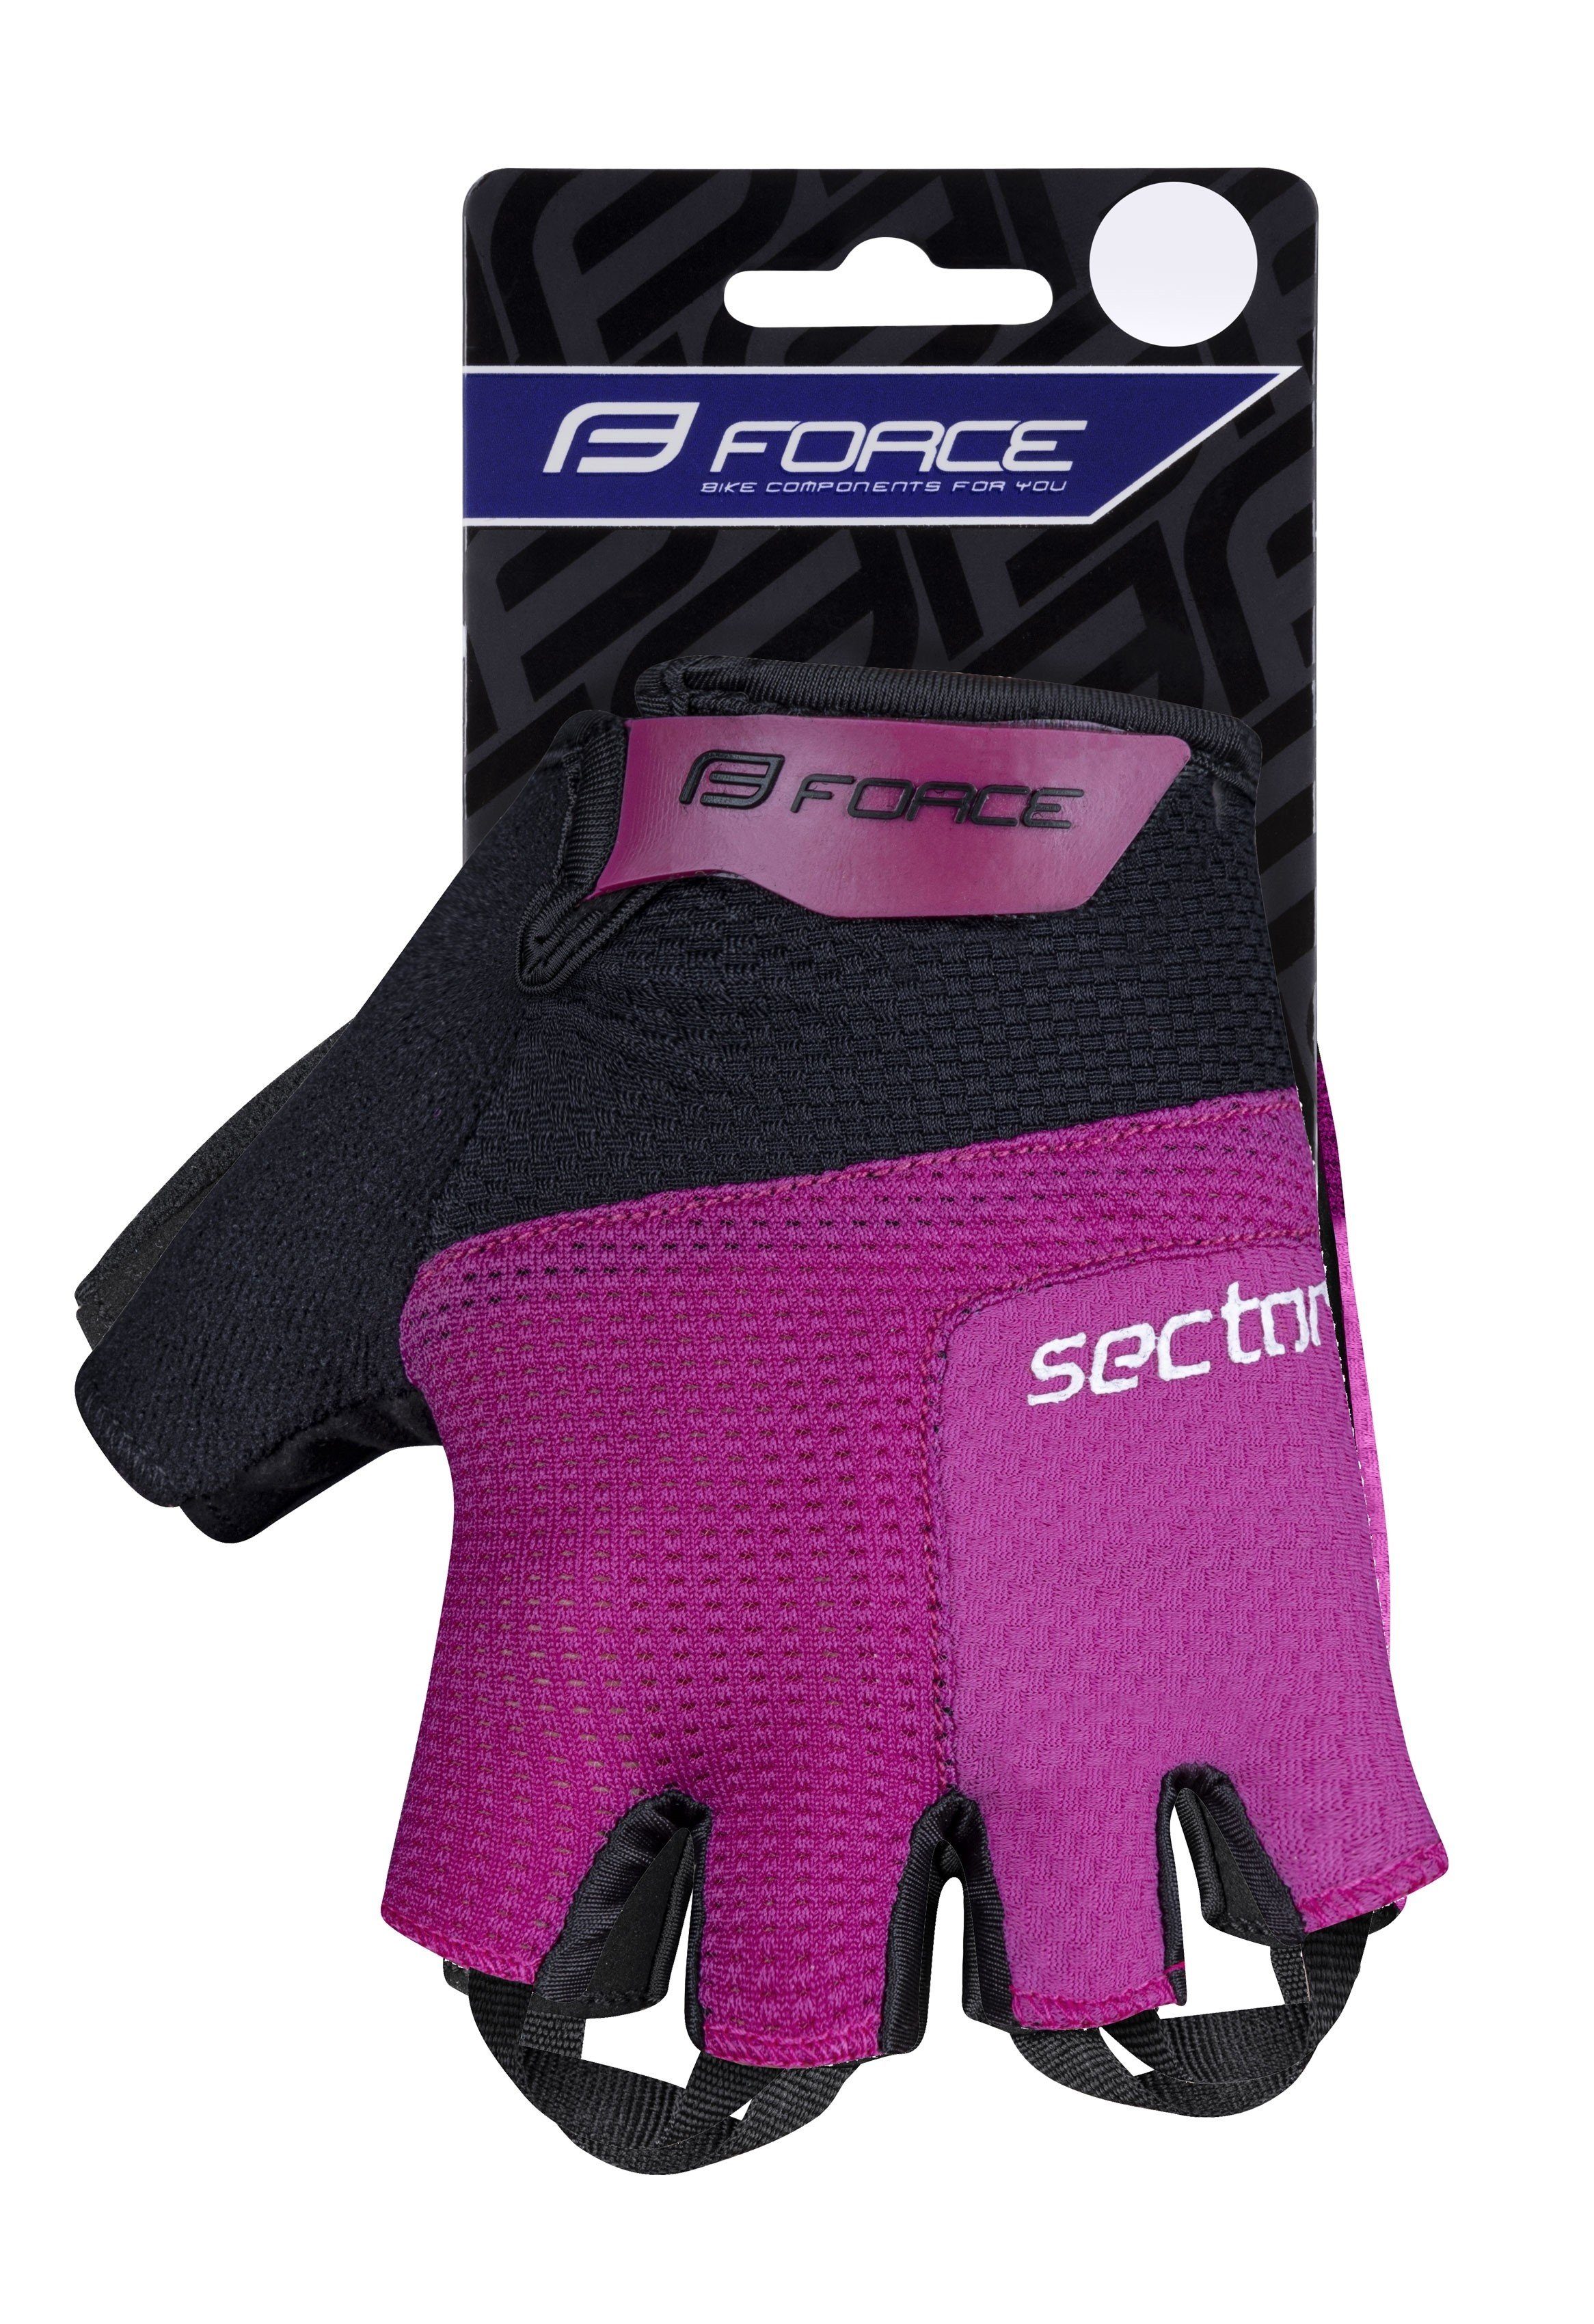 FORCE Fahrradhandschuhe Handschuhe pink-schwarz SECTOR FORCE LADY